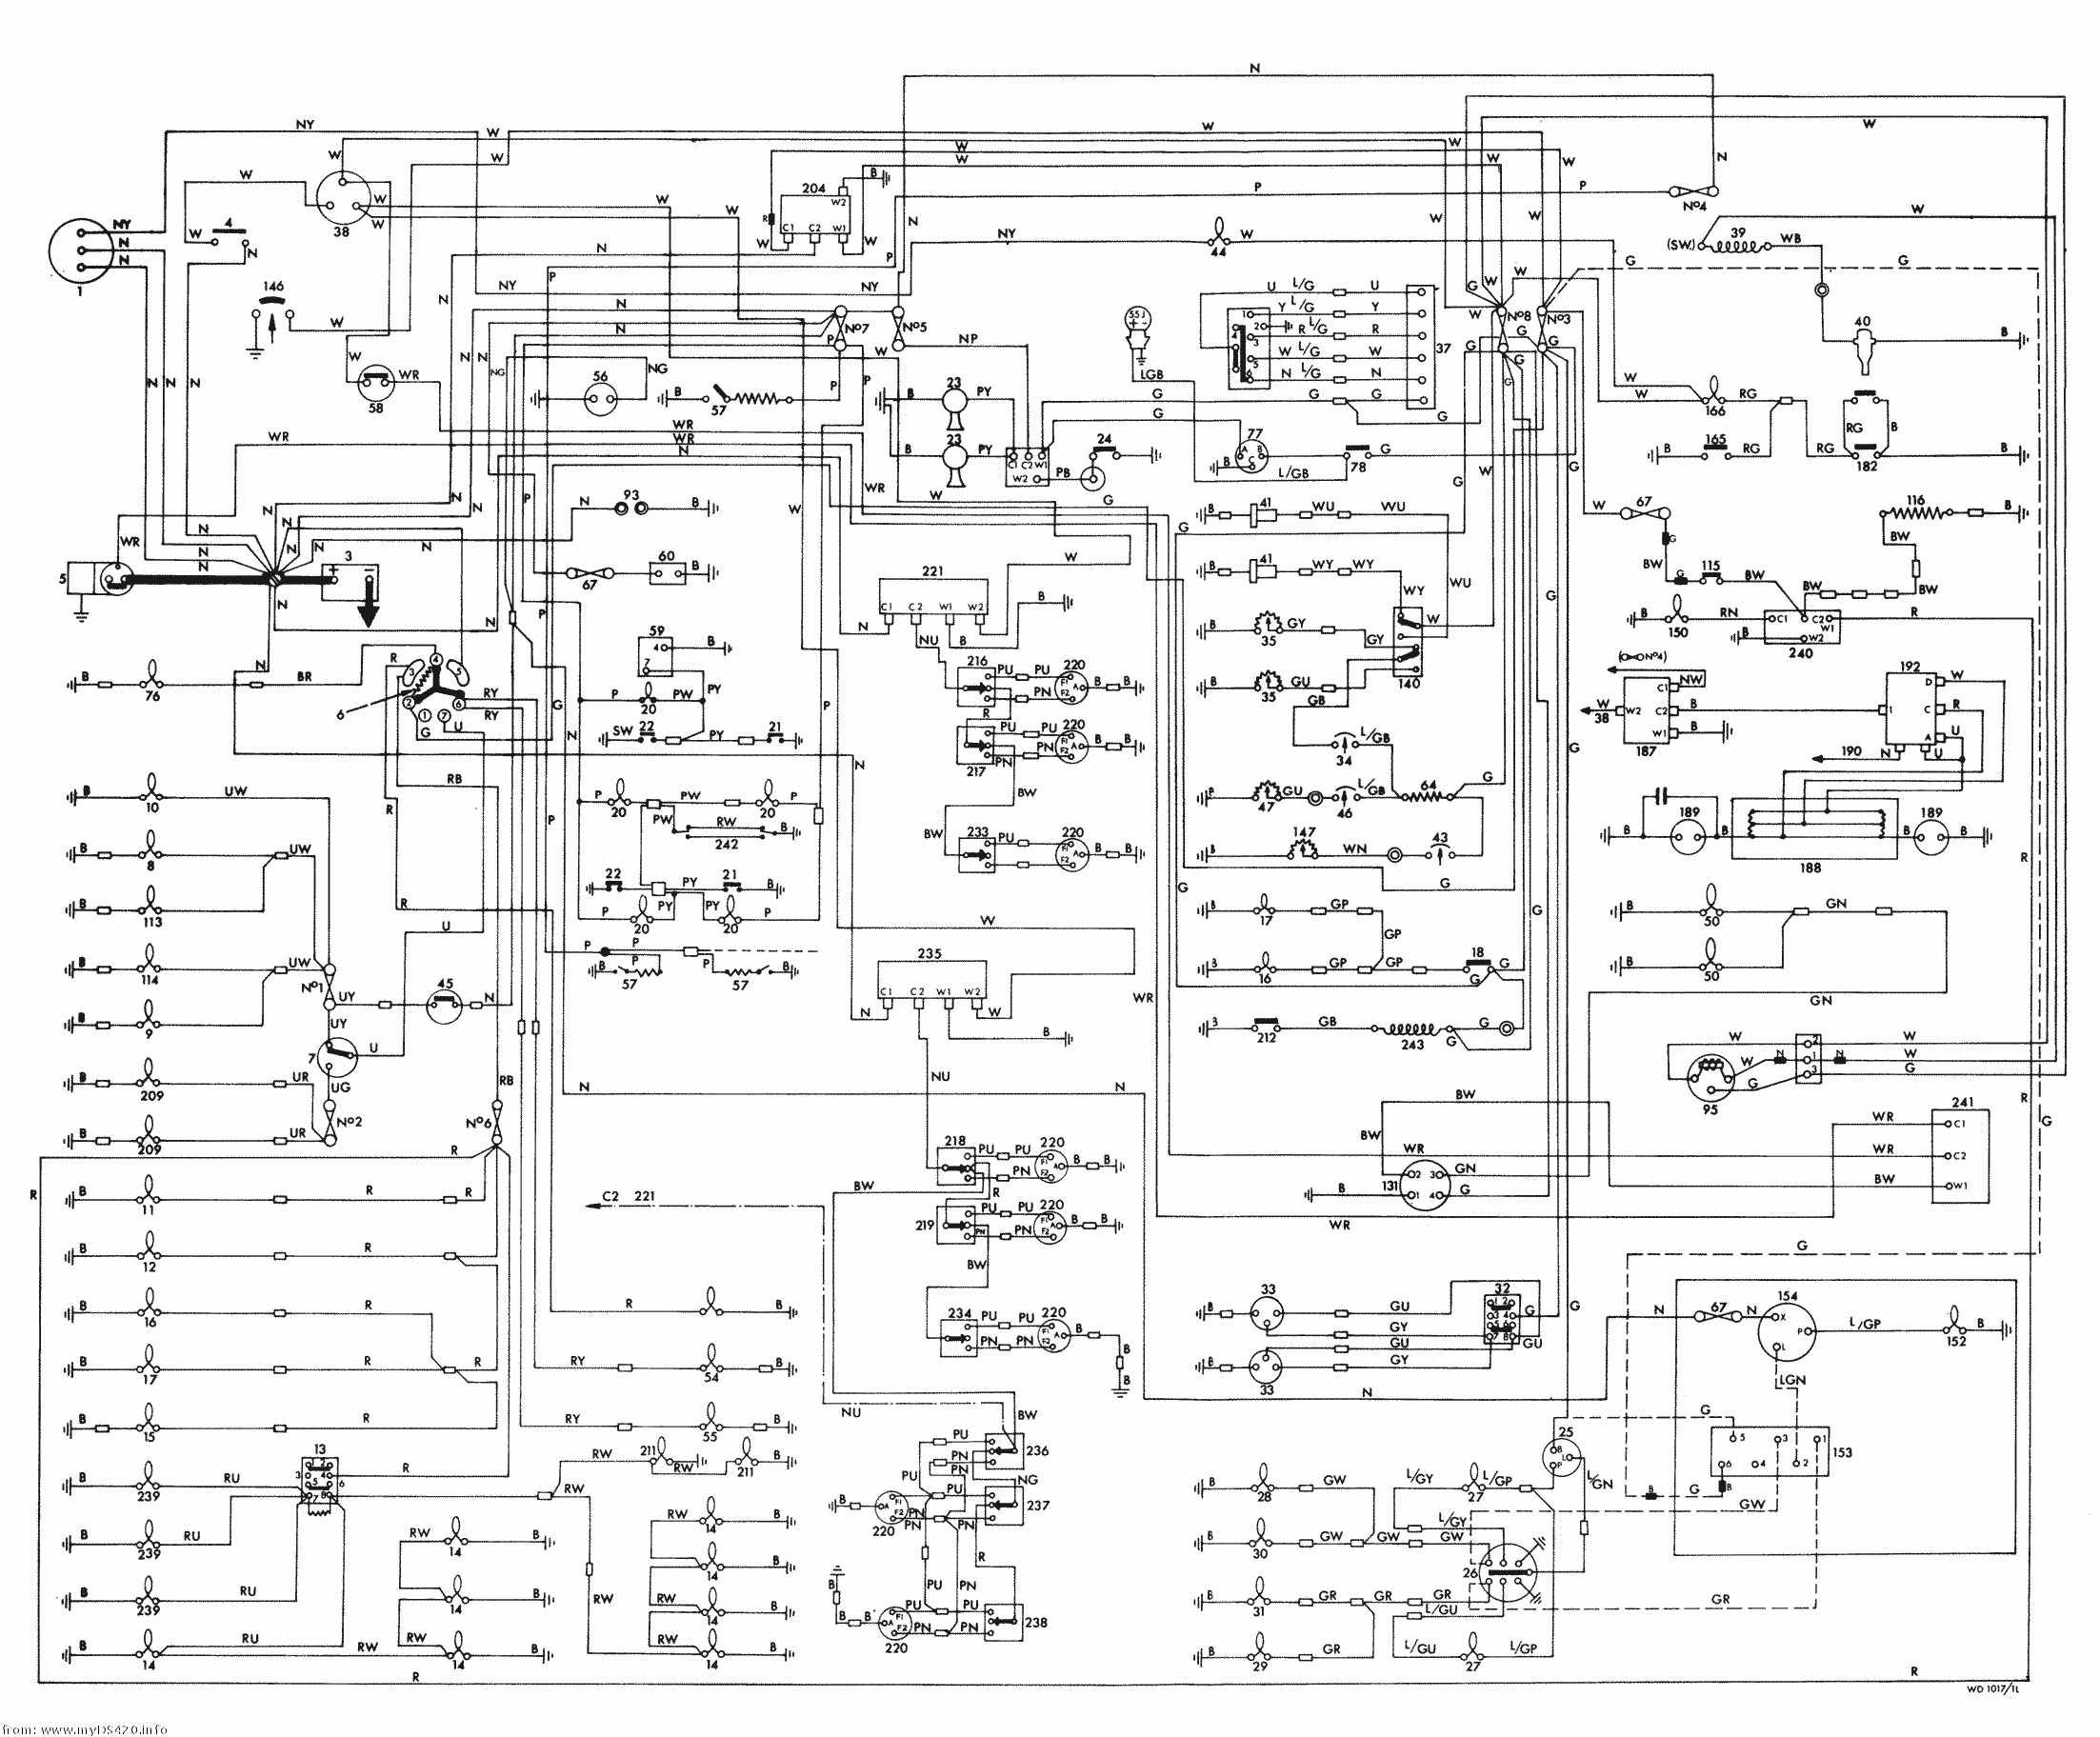 wiring diagram high res. (1970)